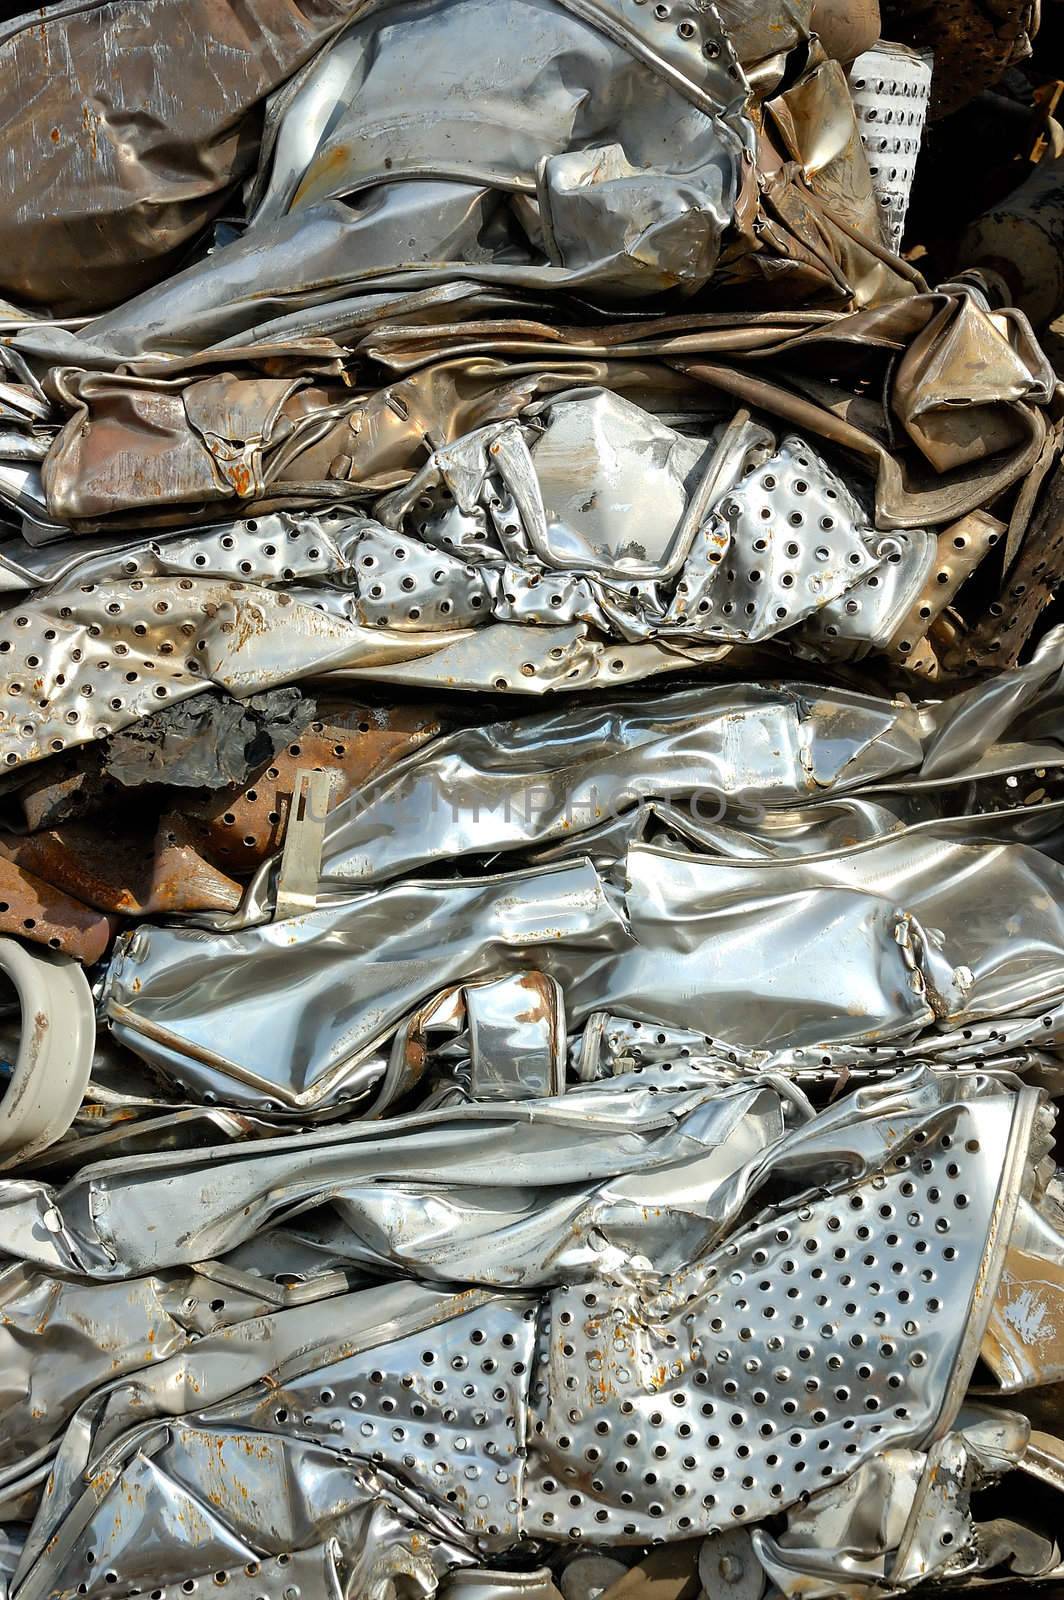 Crushed washing machines for metal recycling